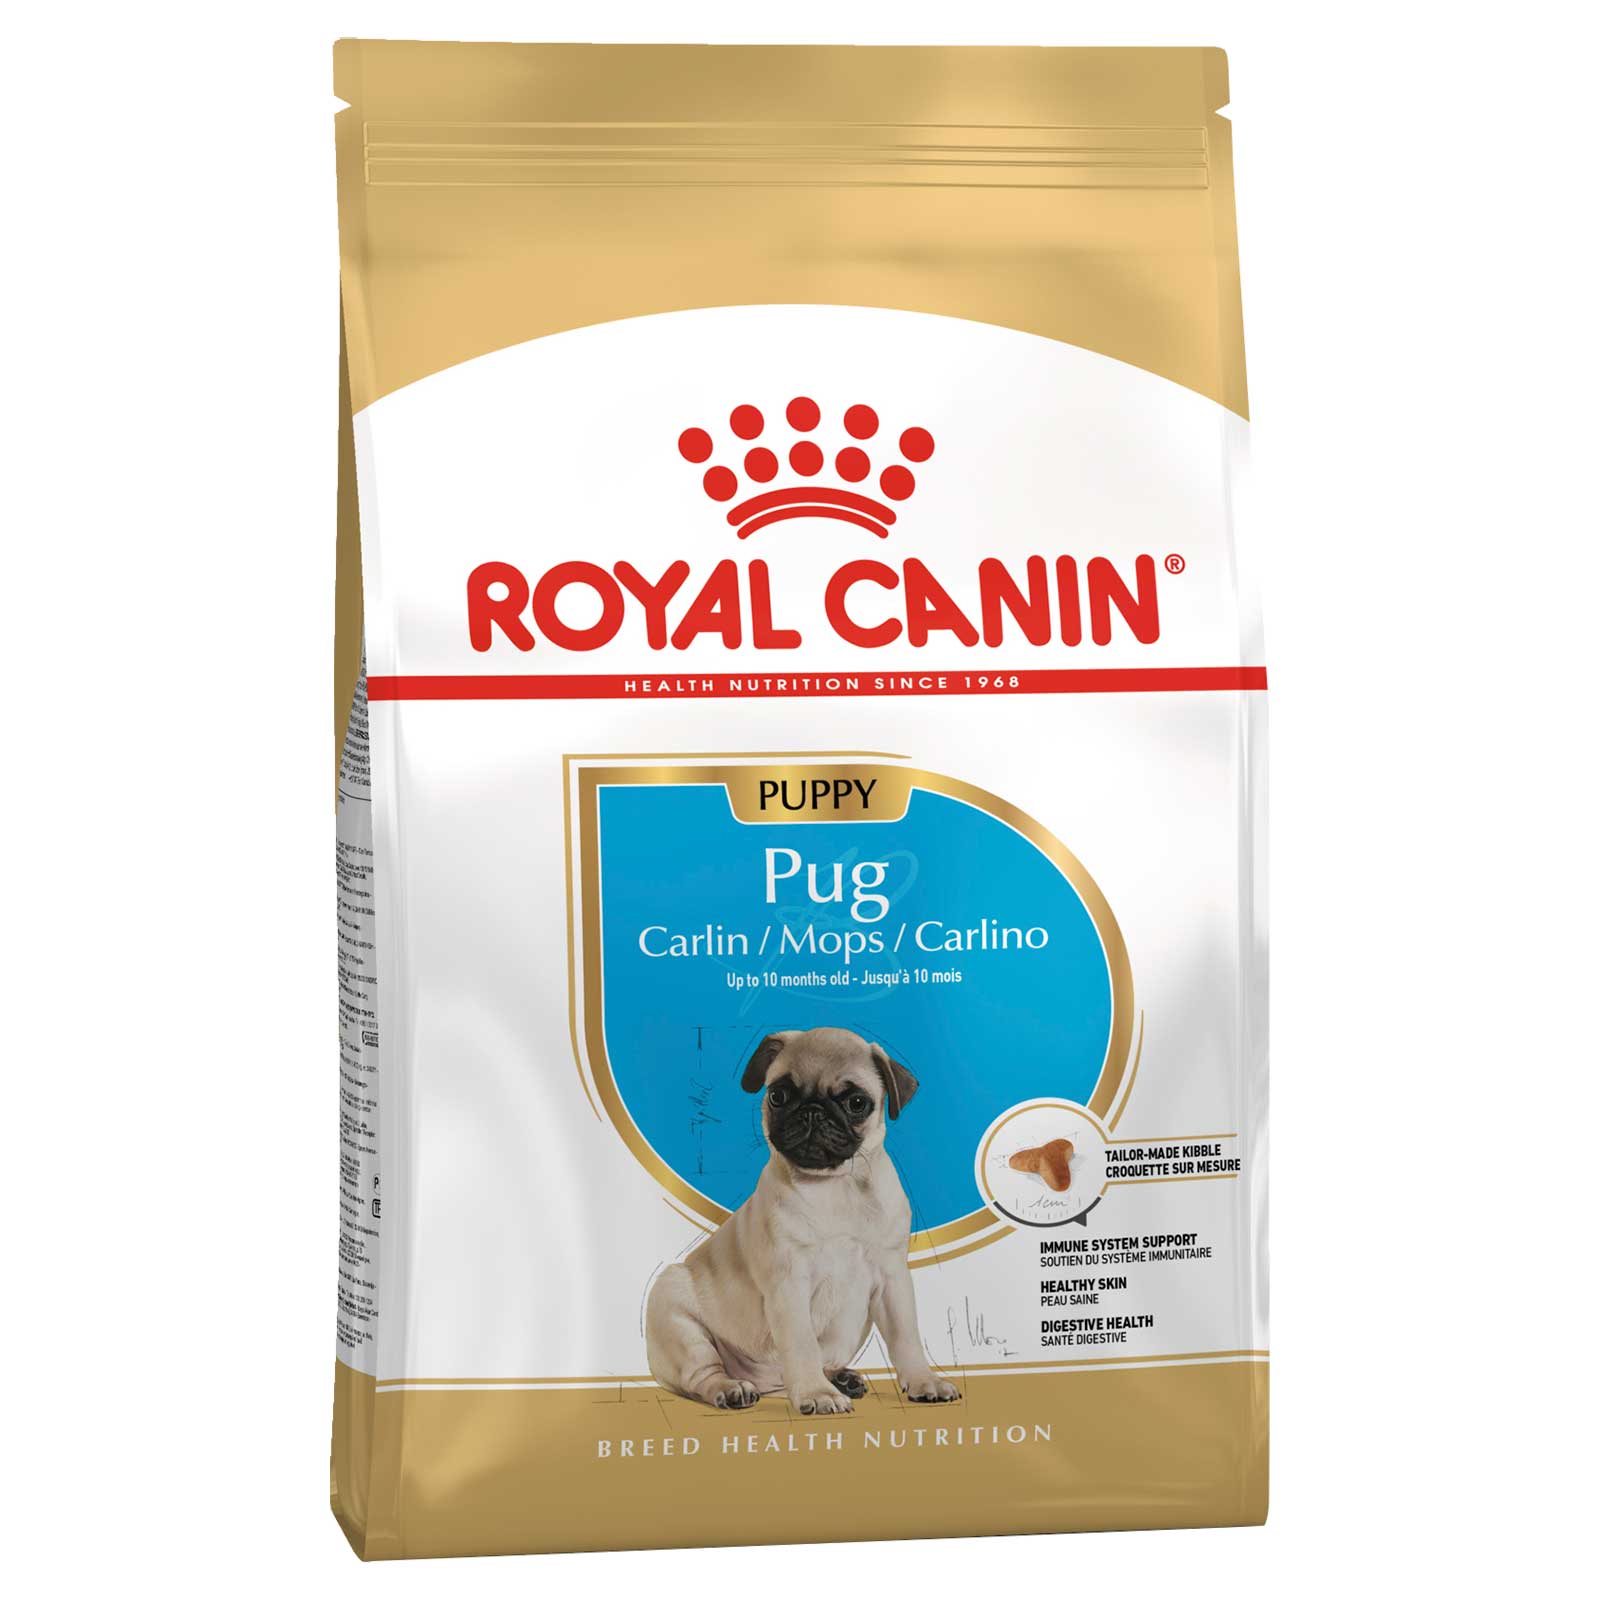 Royal Canin Dog Food Puppy Pug